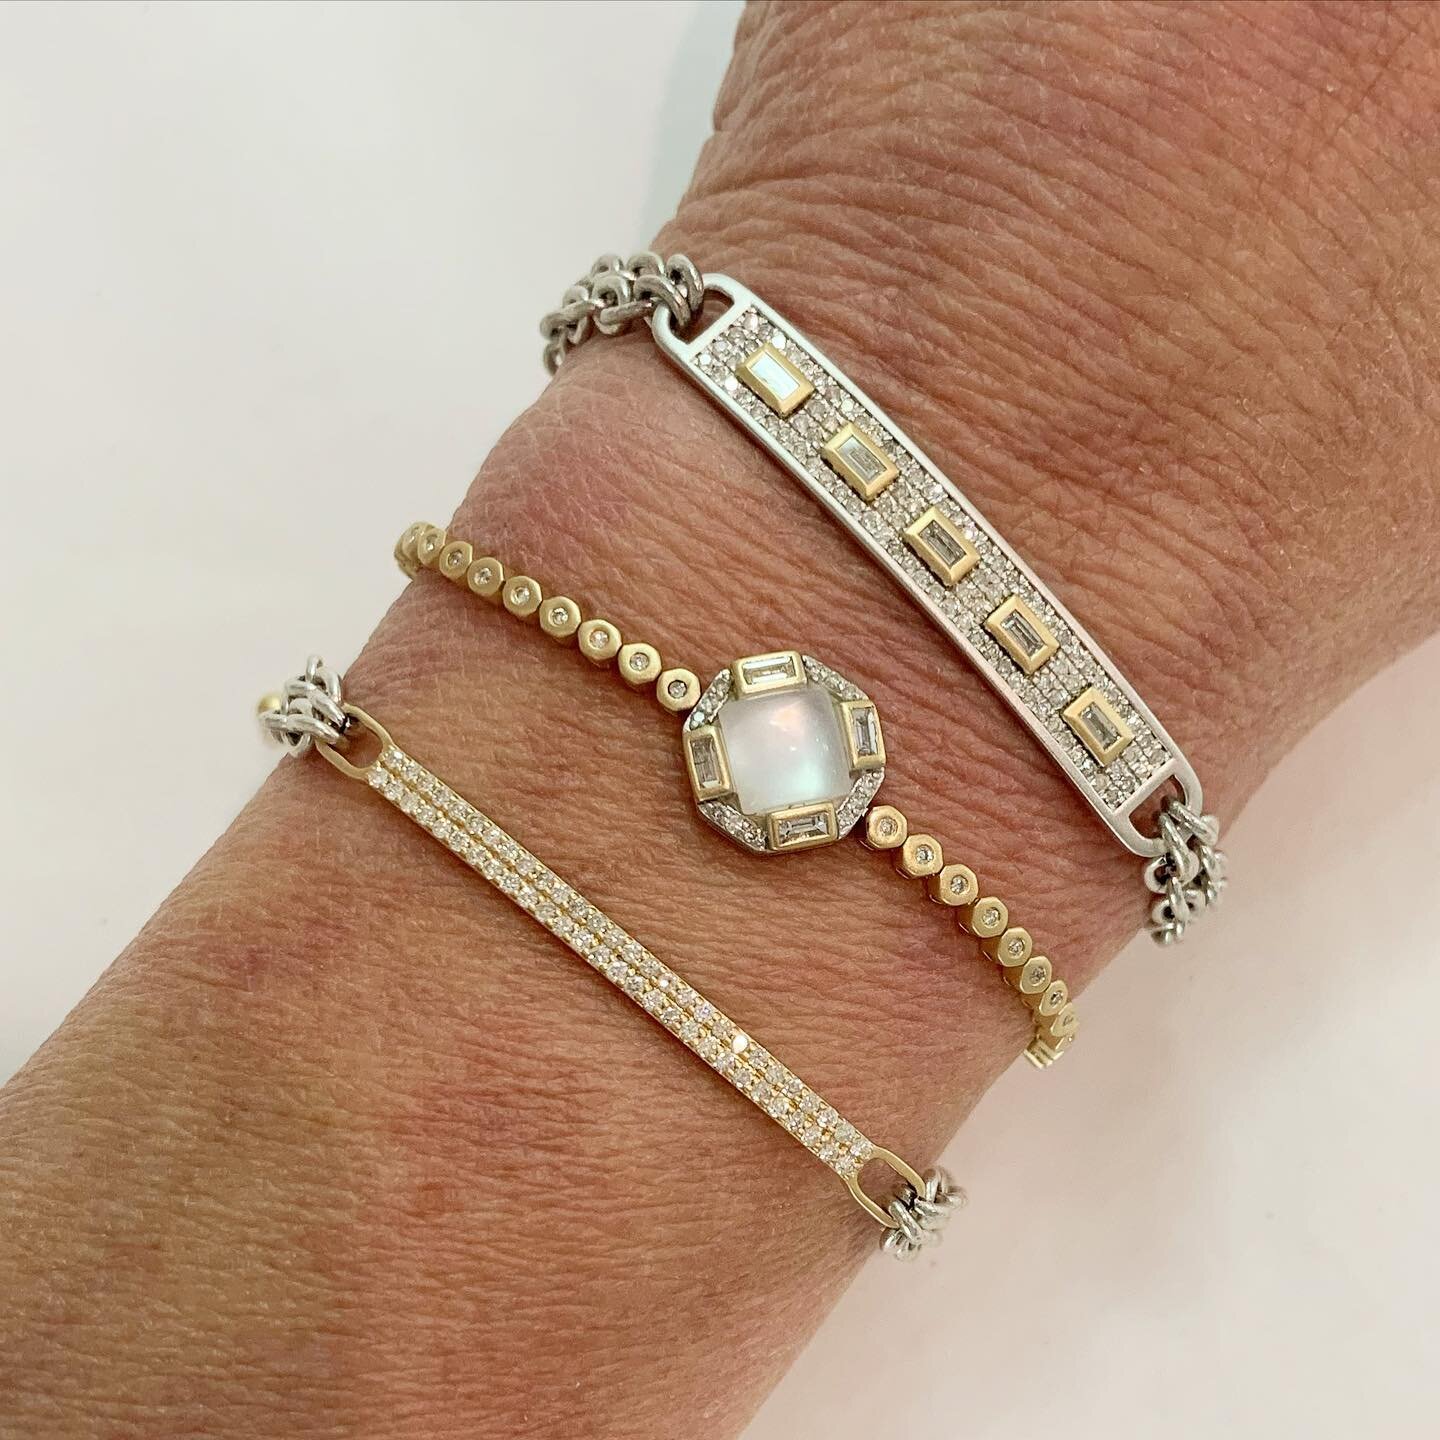 Loving todays stack!
.
.
.
.
.
.
#armcandy #bracelets #gold #diamonds #diamondsareagirlsbestfriend #diamondsareforever #baguette #baguettediamonds #mothersday #finejewelry #designerjewelry